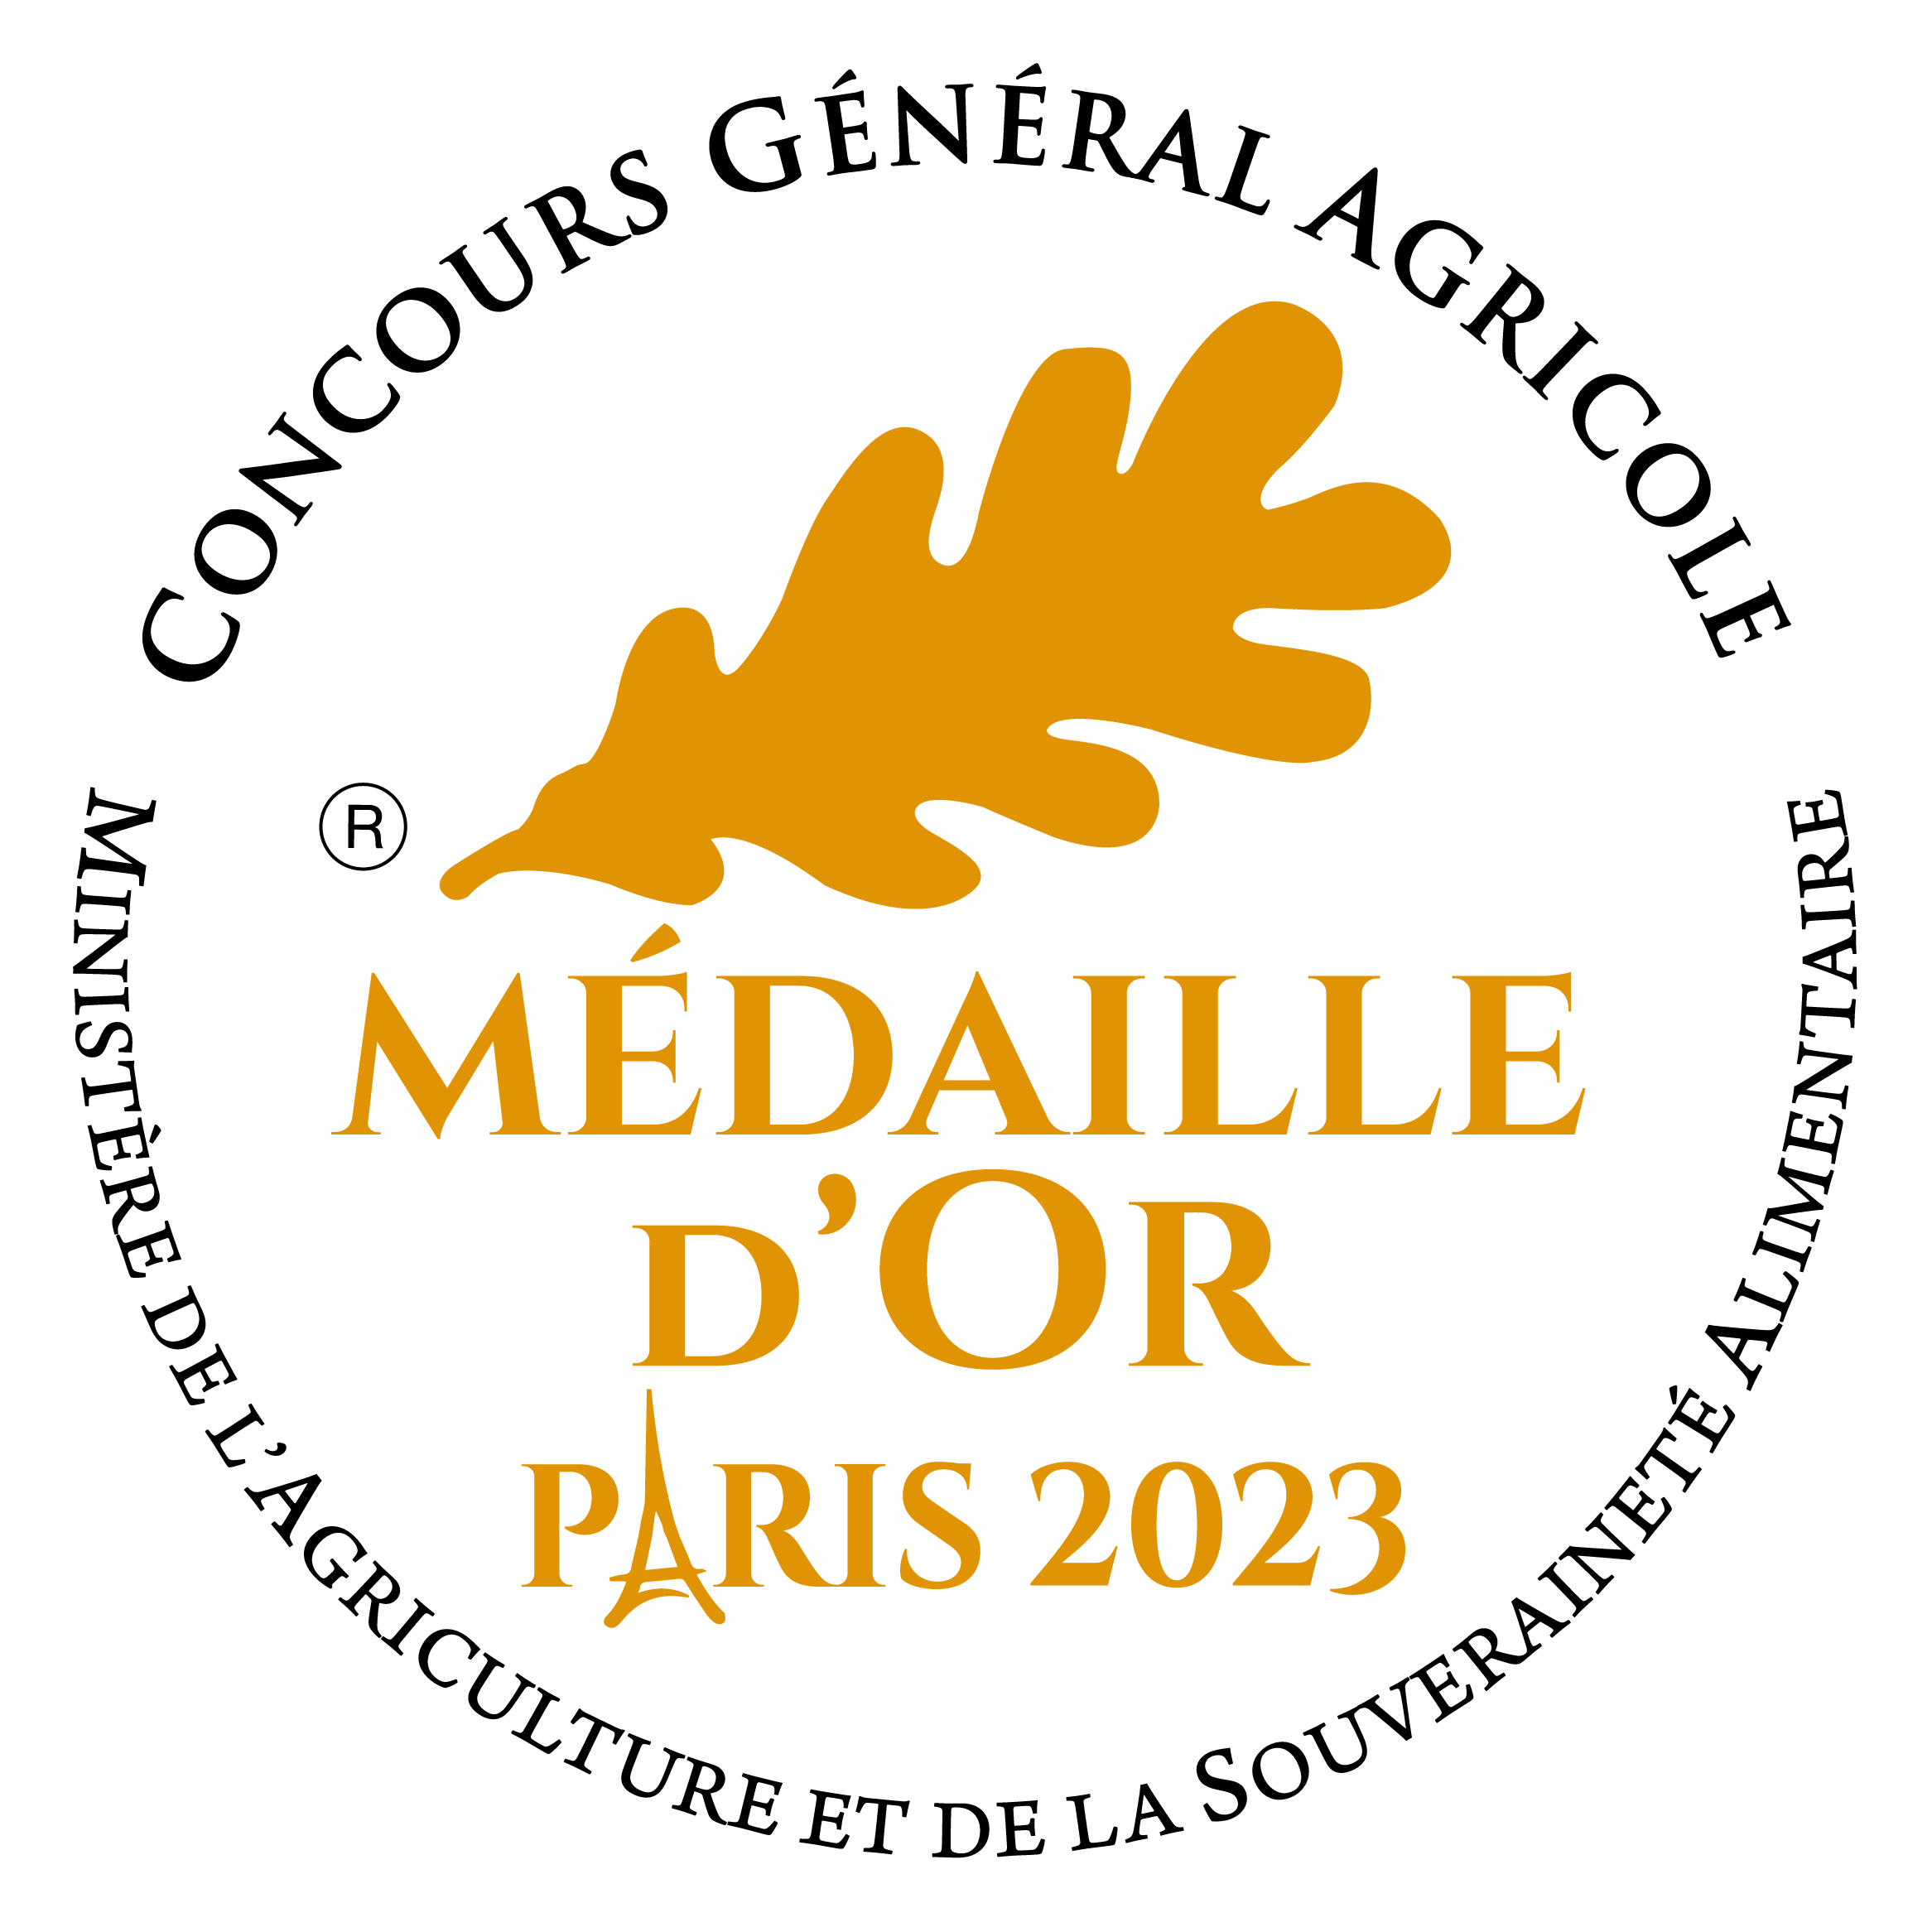 LOGO_jpg_MEDAILLE_OR_2023 Chateau Mayne-Vieil - CHATEAU MAYNE-VIEIL 2020